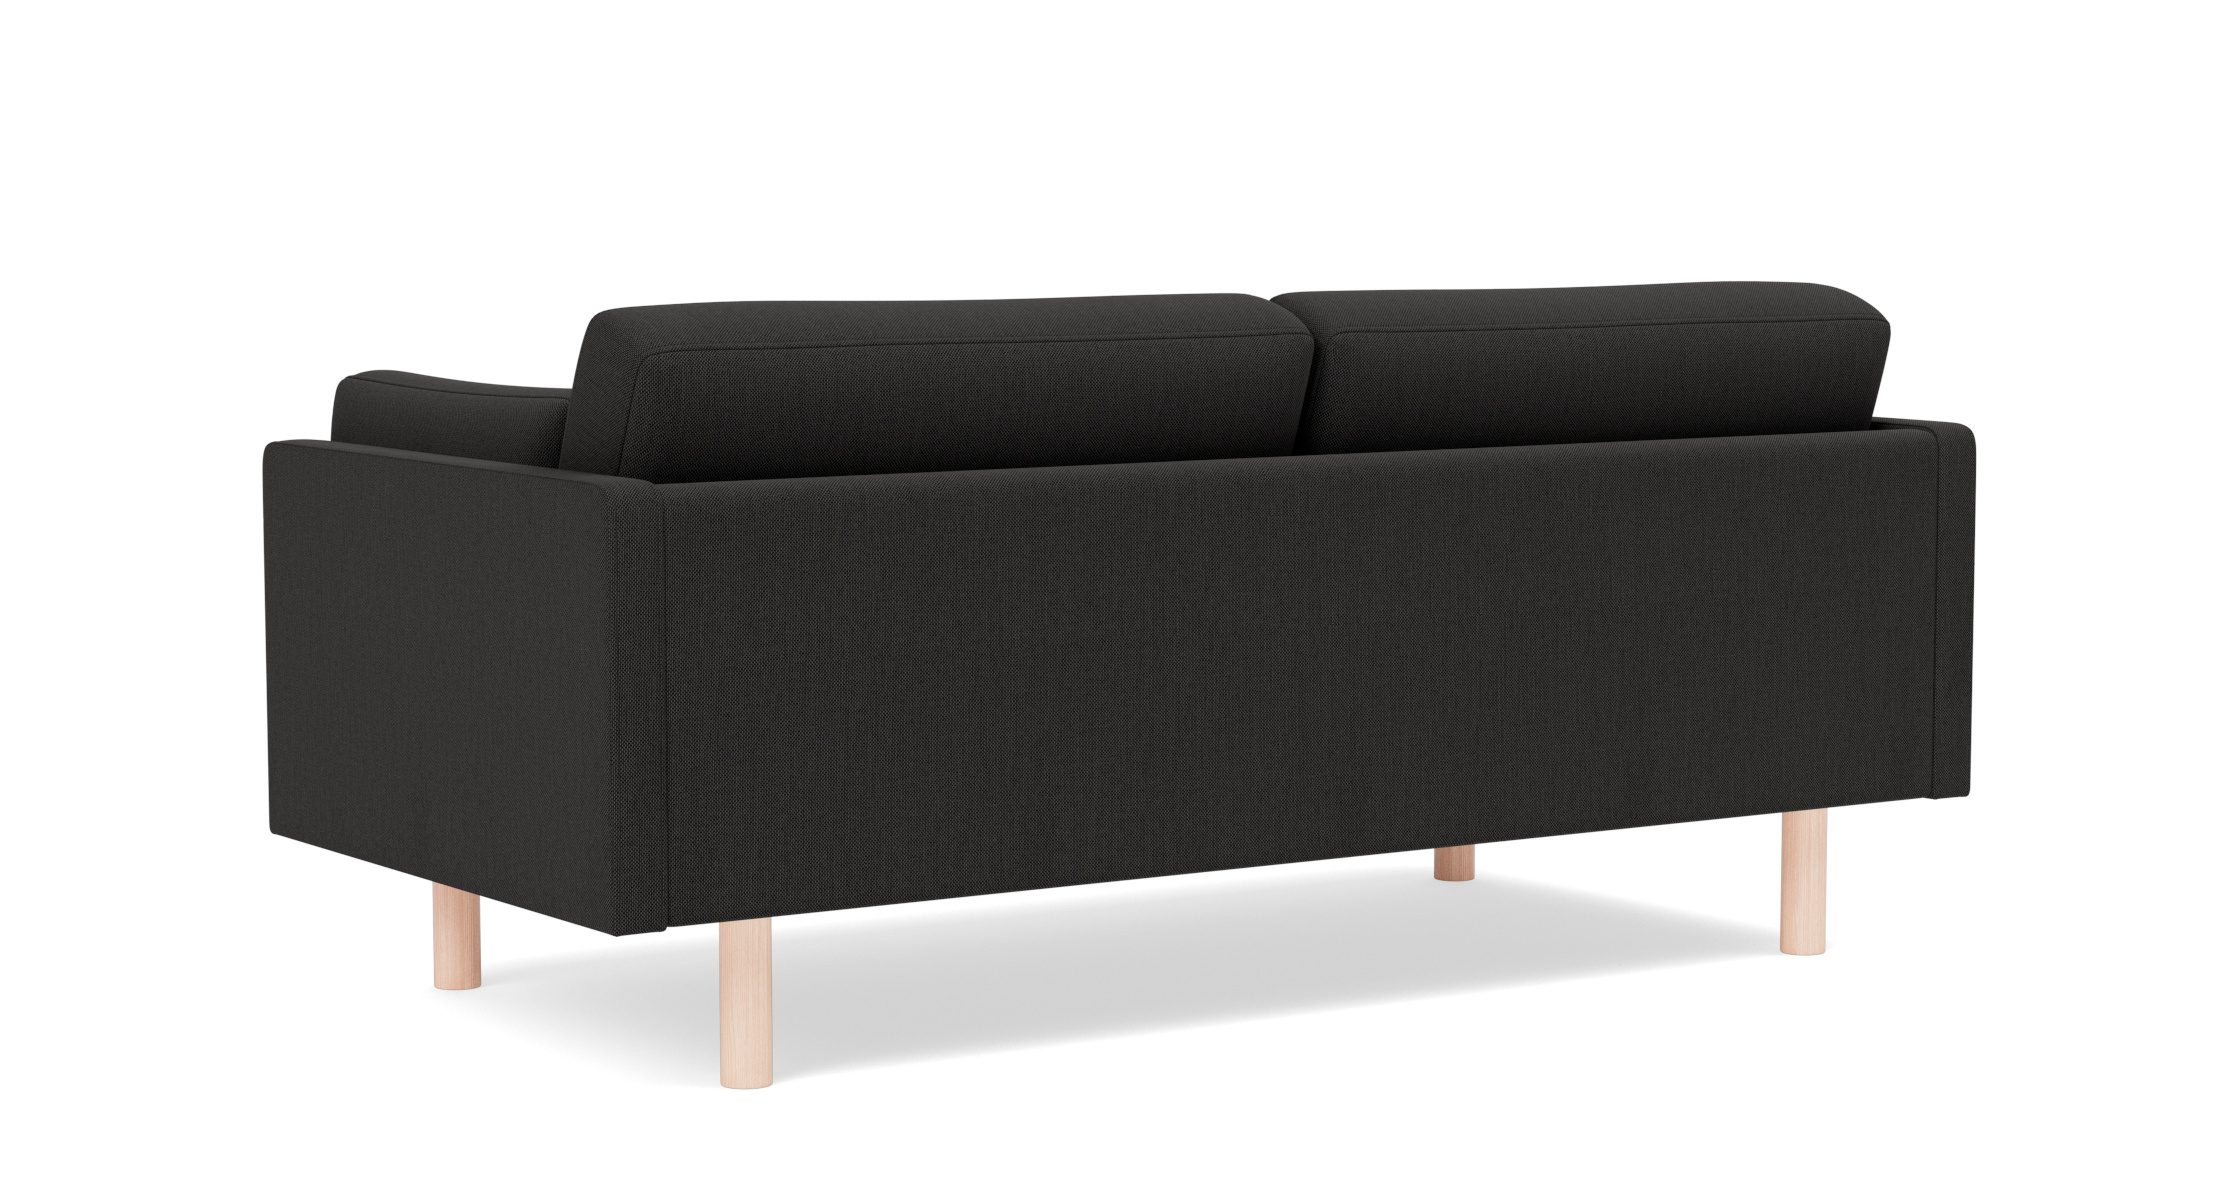 EJ220 Sofa 2-Sitzer, 76 cm, eiche geseift / re-wool 198